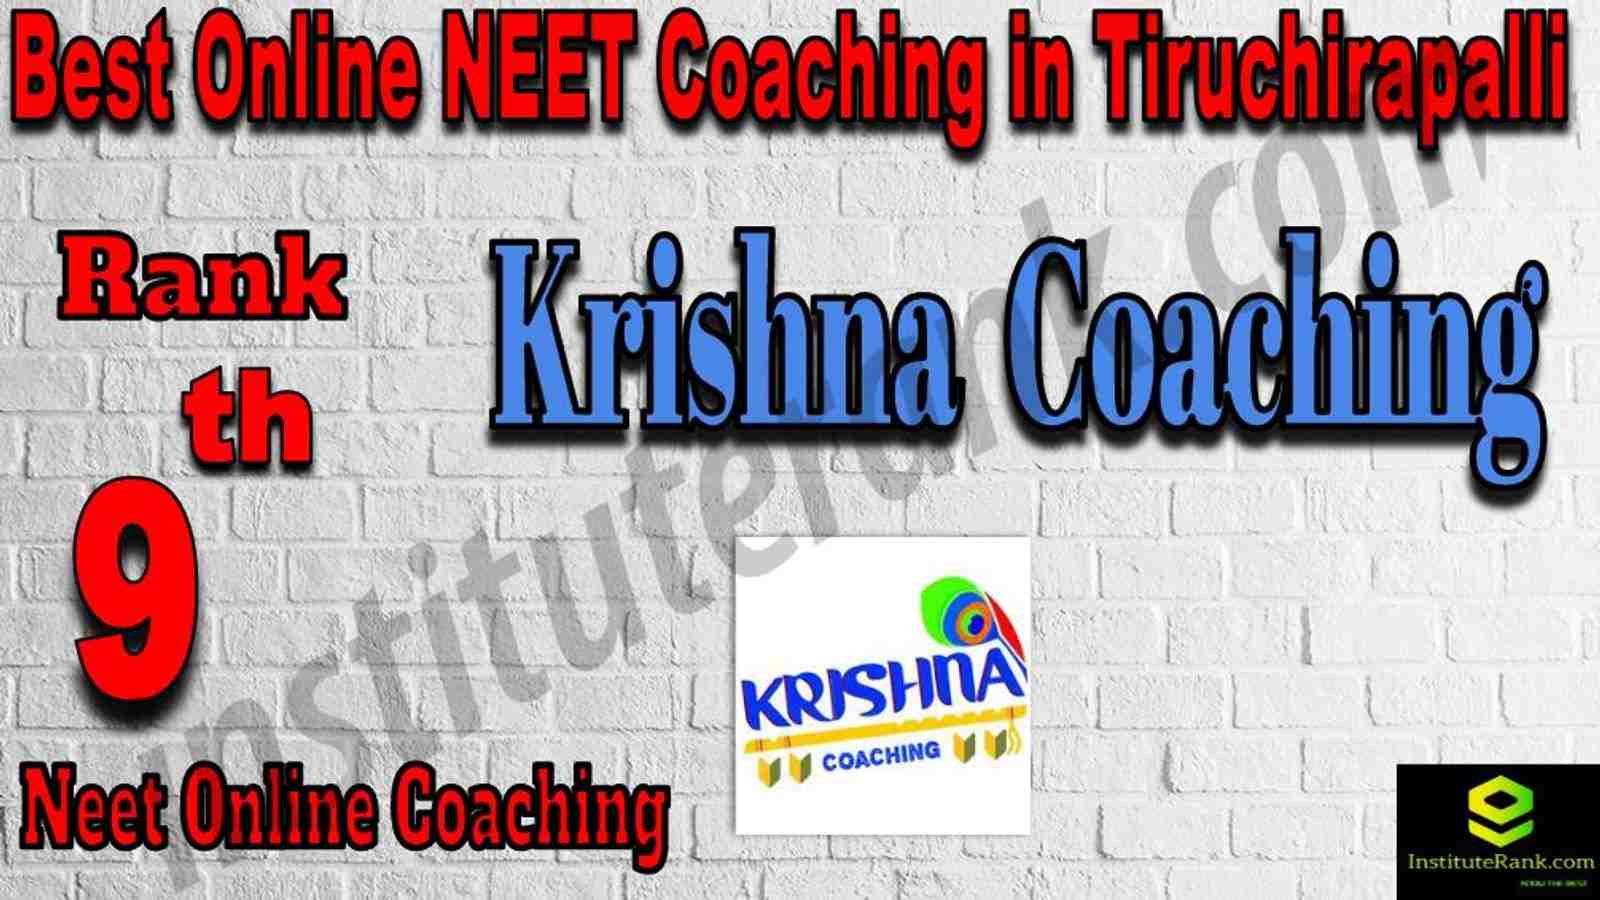 9th Best Online Neet Coaching in Tiruchirapalli